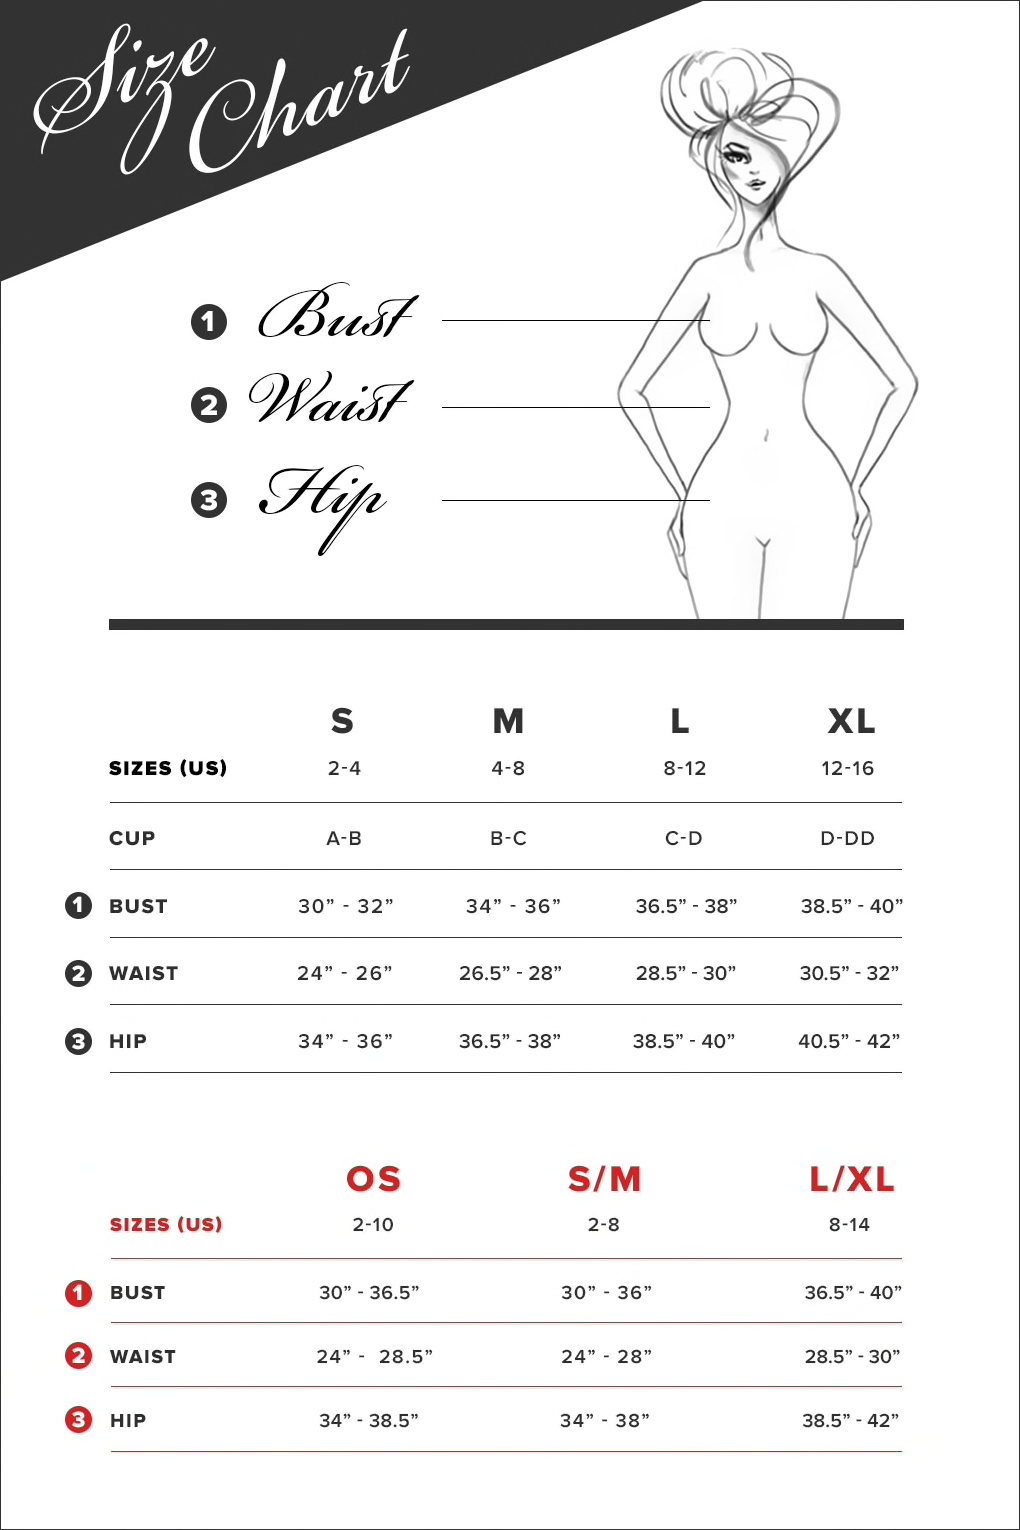 Oh La La Cherie Size Chart — Honoring Intimates